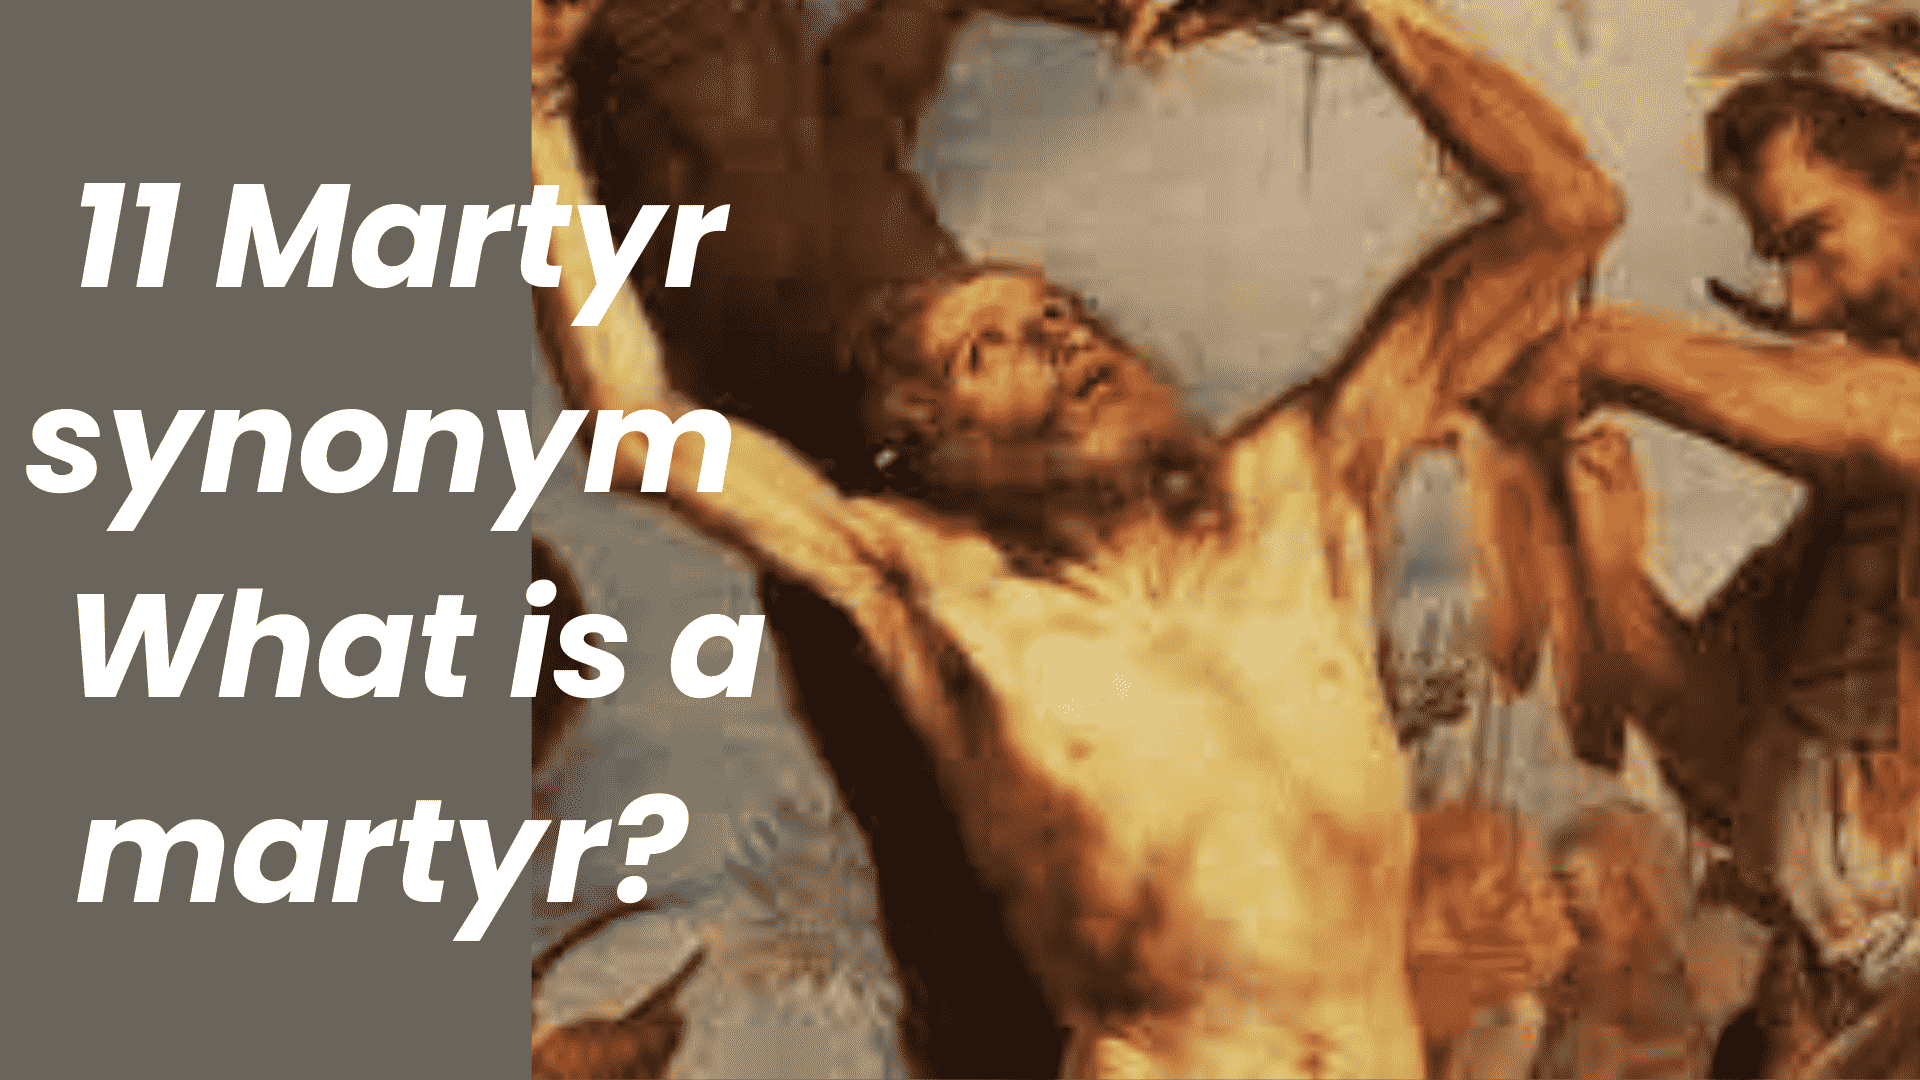 11 Martyr synonym l What is a martyr? 